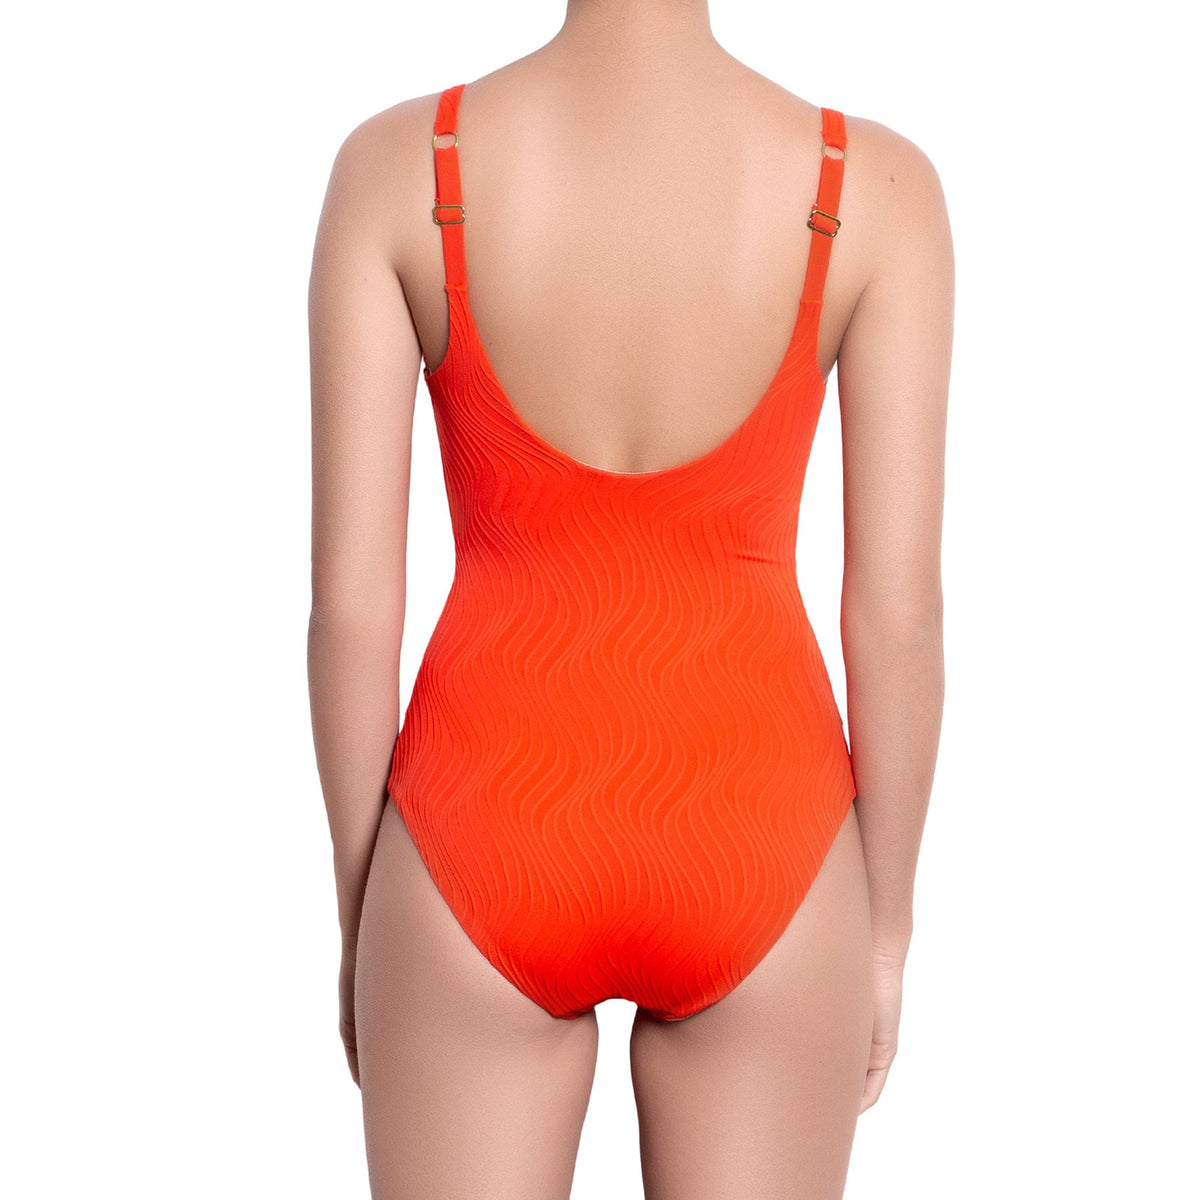 JULIETTE v-neck one piece, textured orange swimsuit by ALMA swimwear ‚Äì back view 